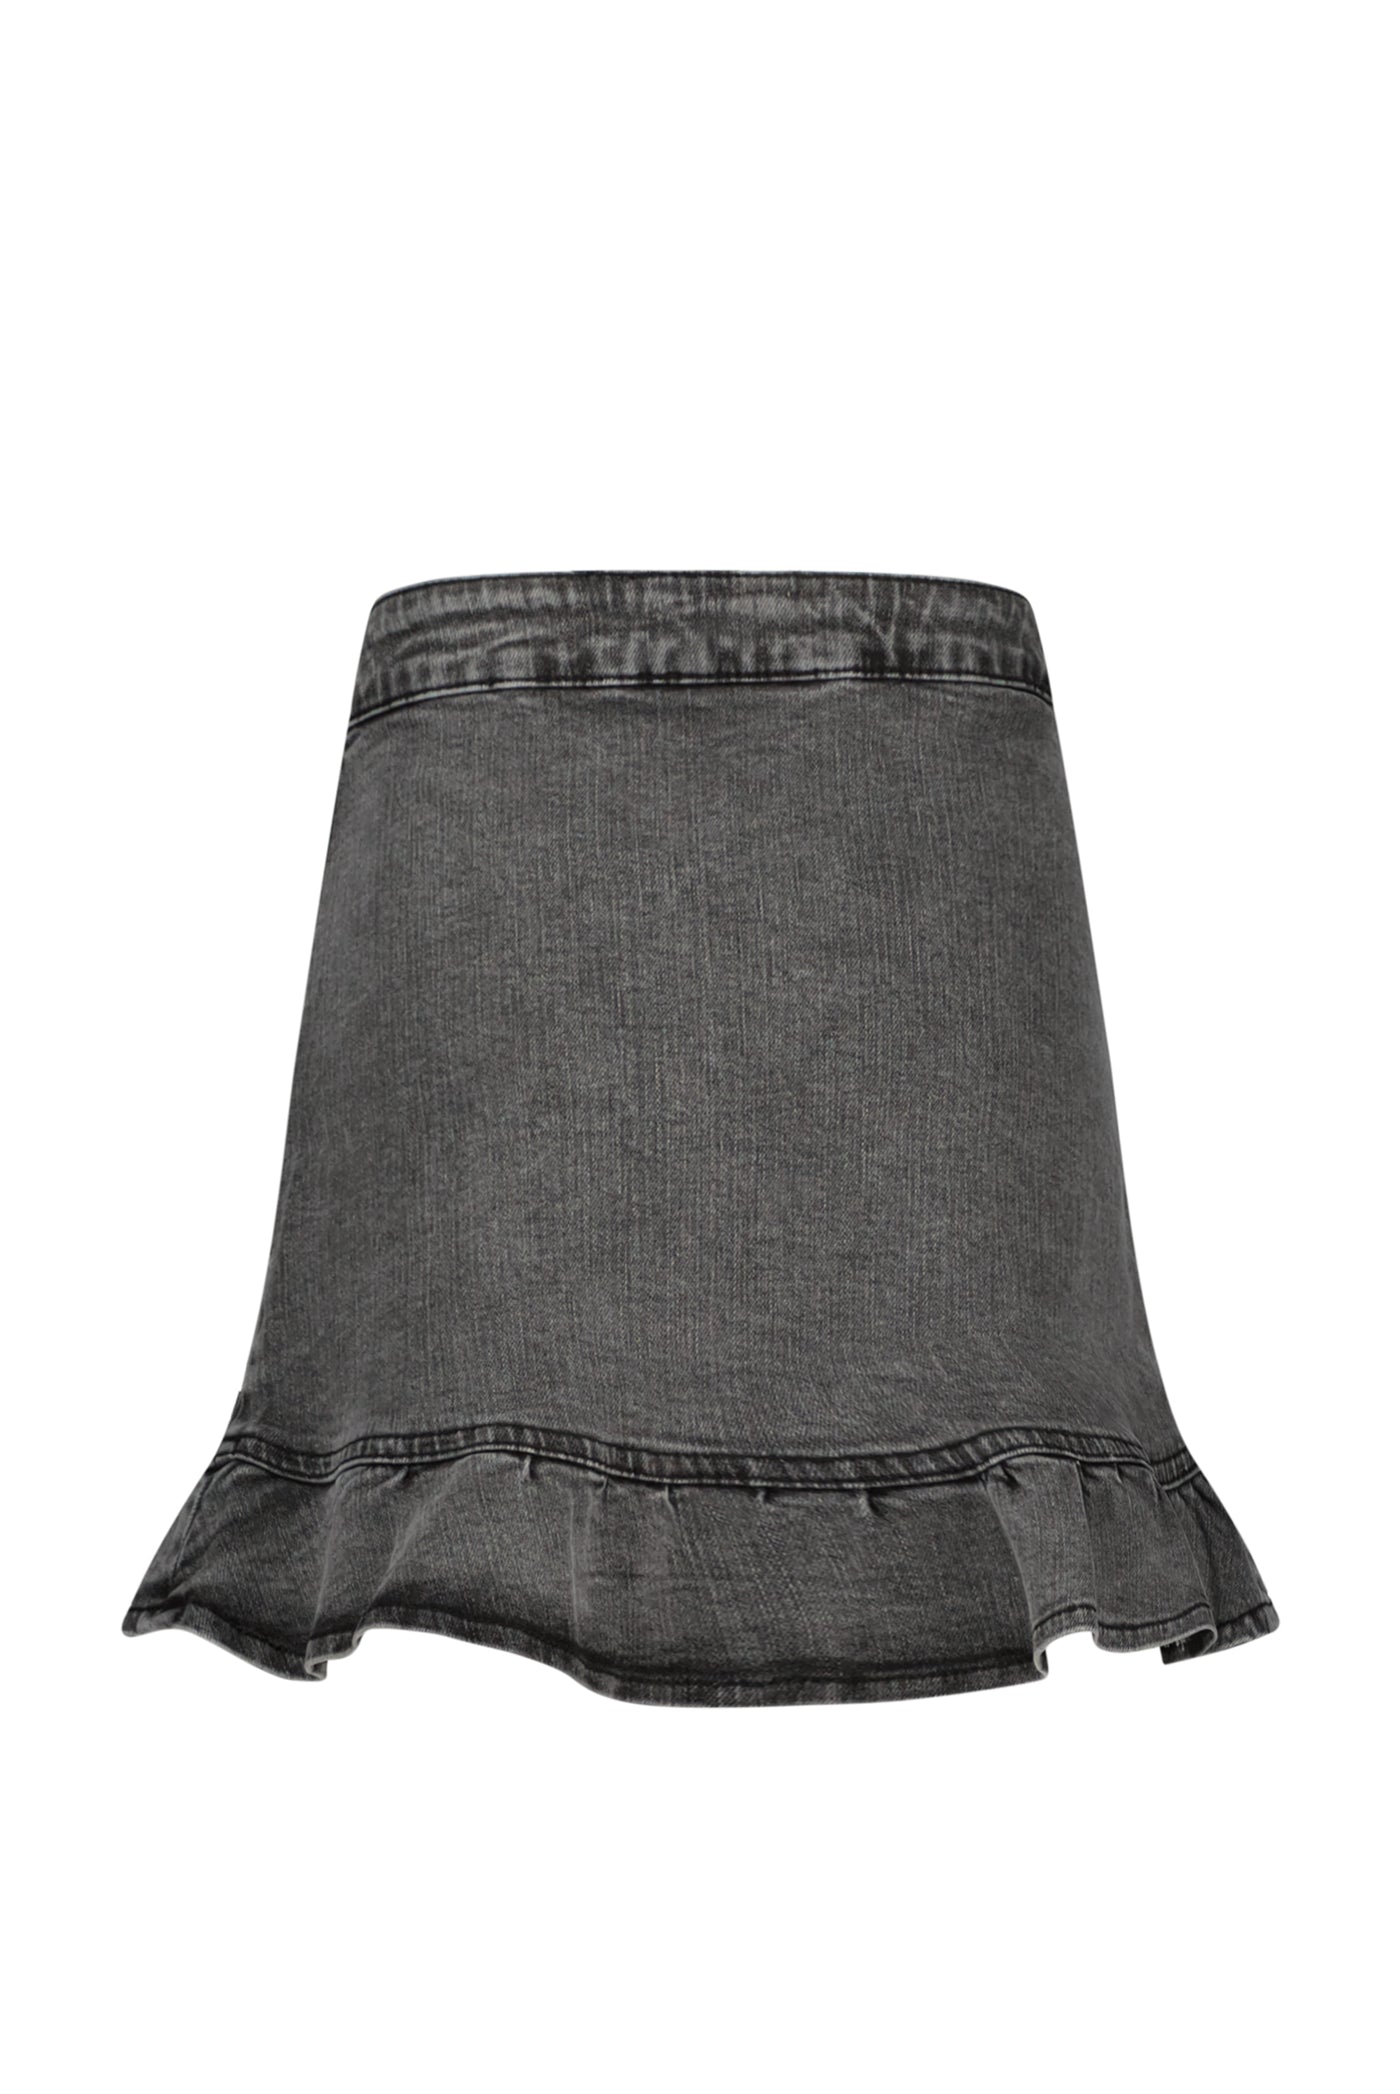 Flo girls grey denim ruffle skirt Grey denim F209-5720 725